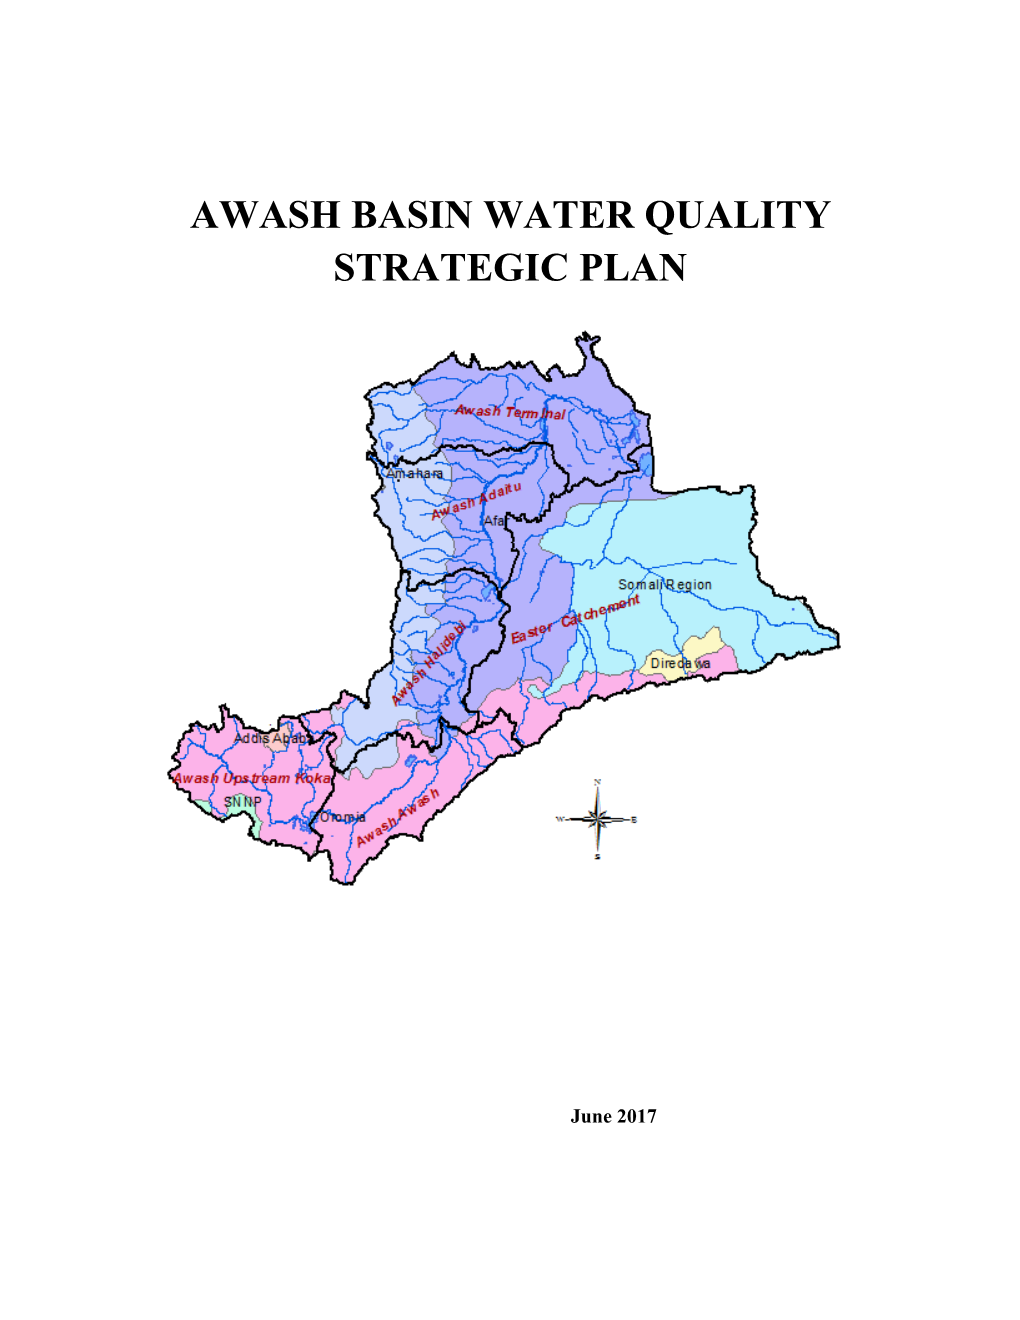 Awash Basin Water Quality Strategic Plan